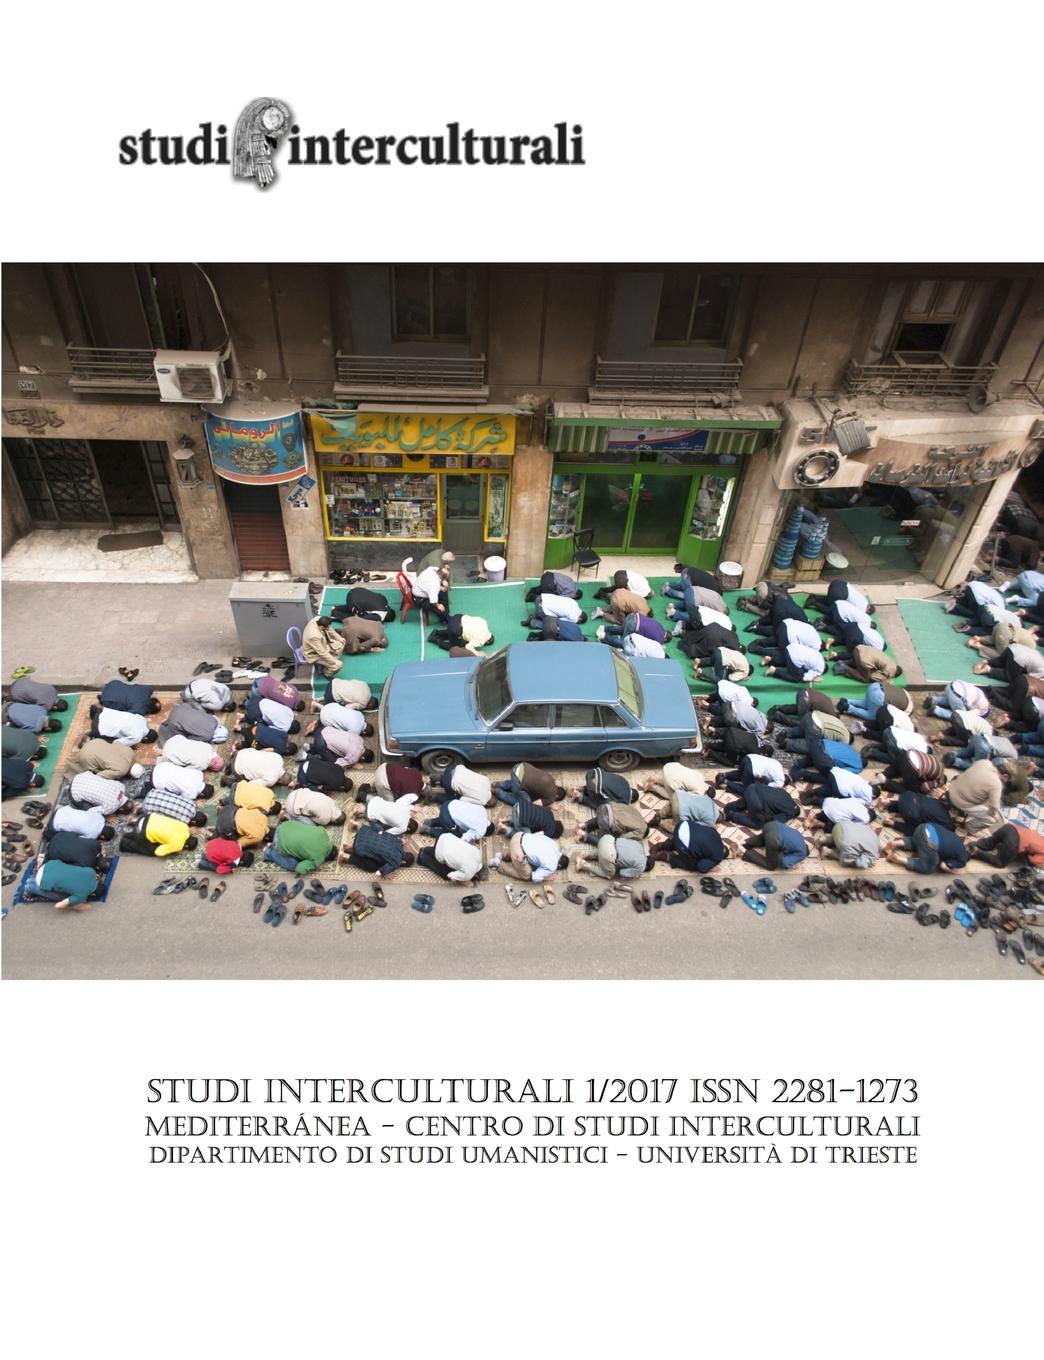 Gianni Ferracuti Studi Interculturali 1/2017